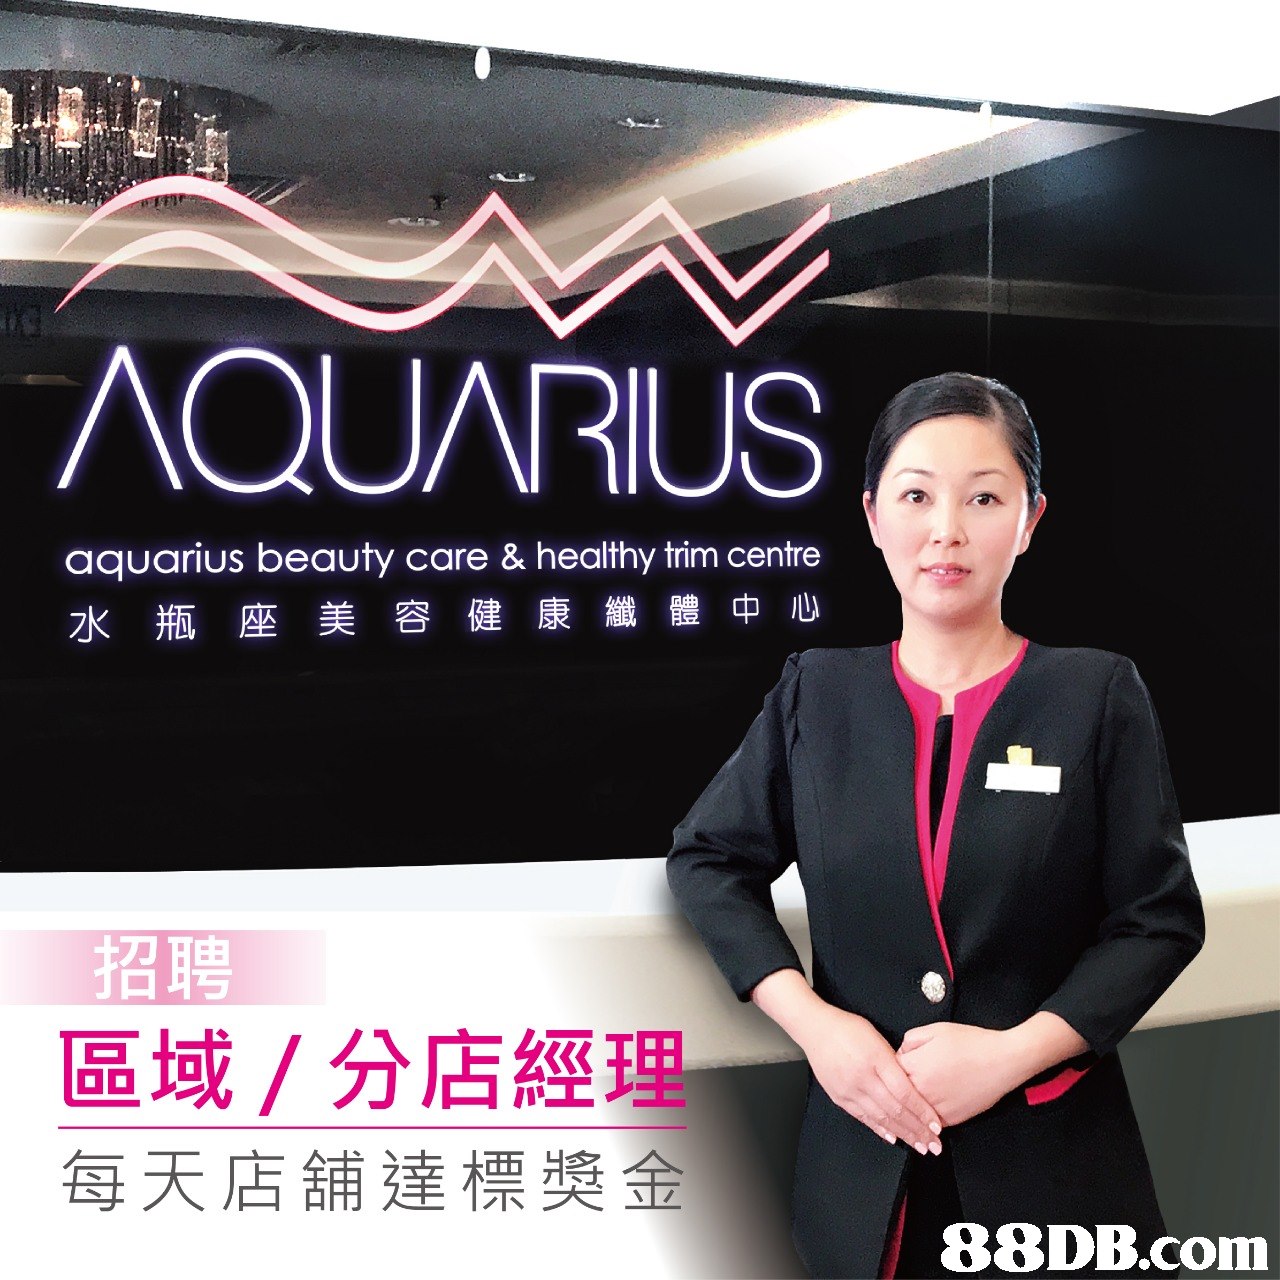 AQUARIUS aquarius beauty care & healthy trim centre 水瓶座美容健康纖體中心 區域〈分店經理 每天店舖達標奬金   Font